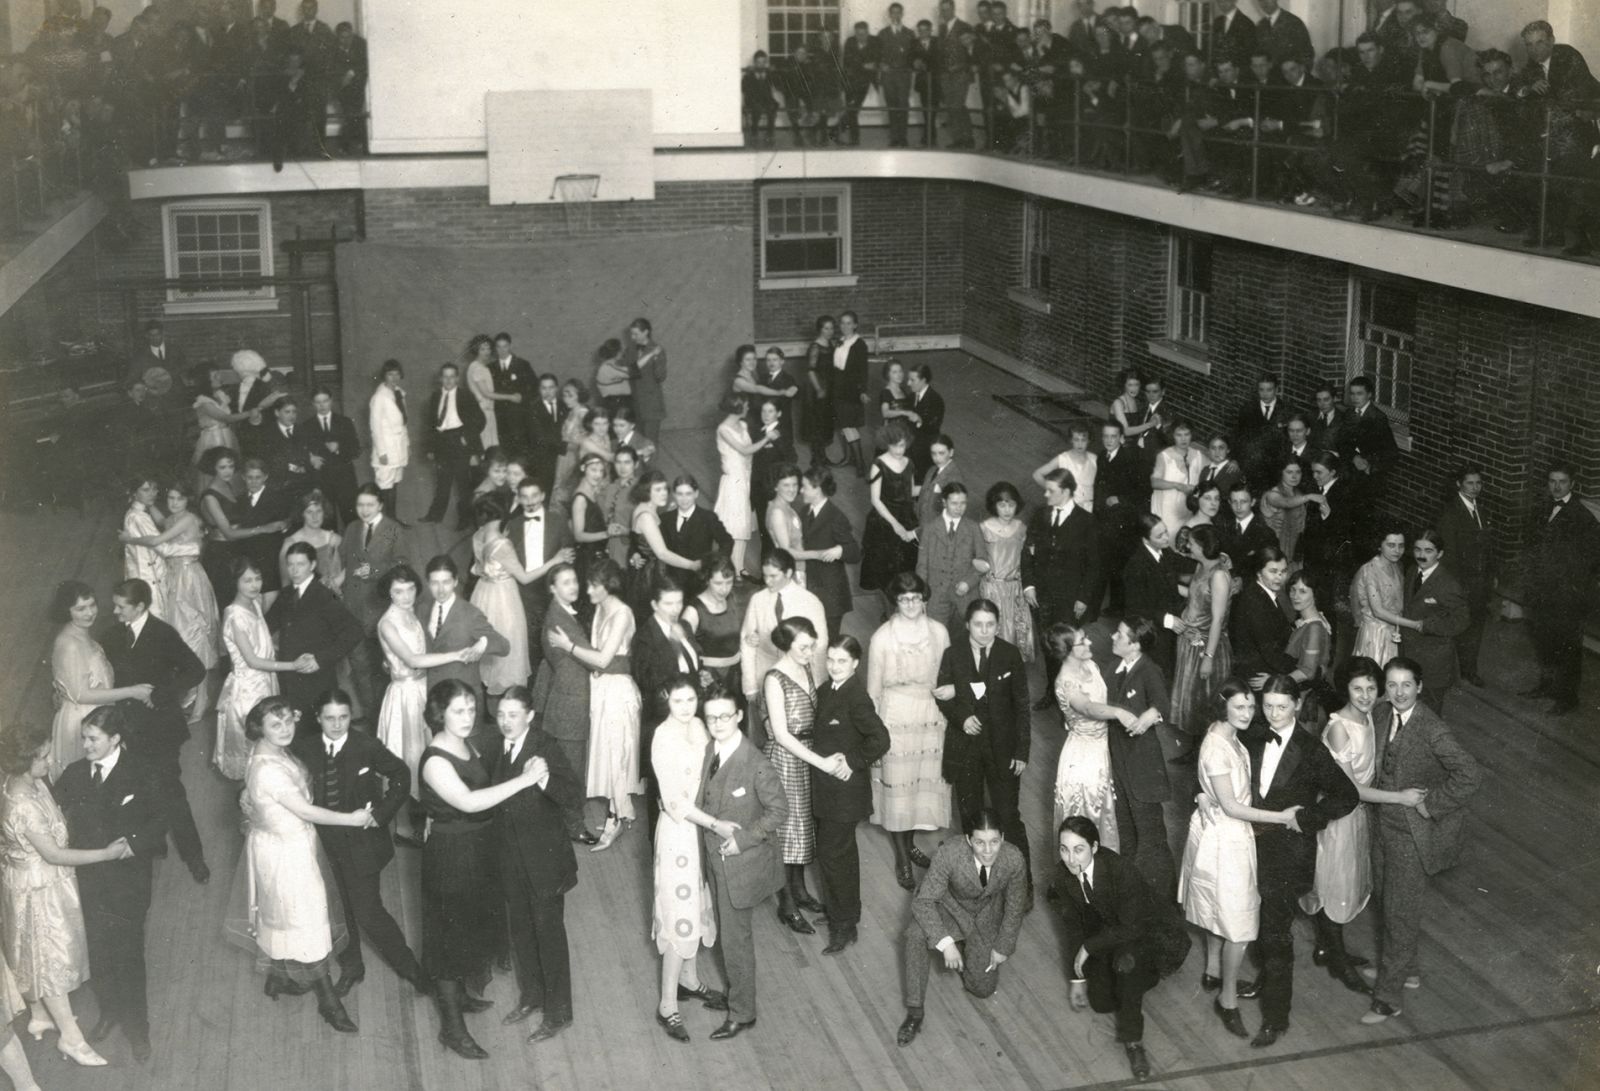 Image of Manless Dance, circa 1923